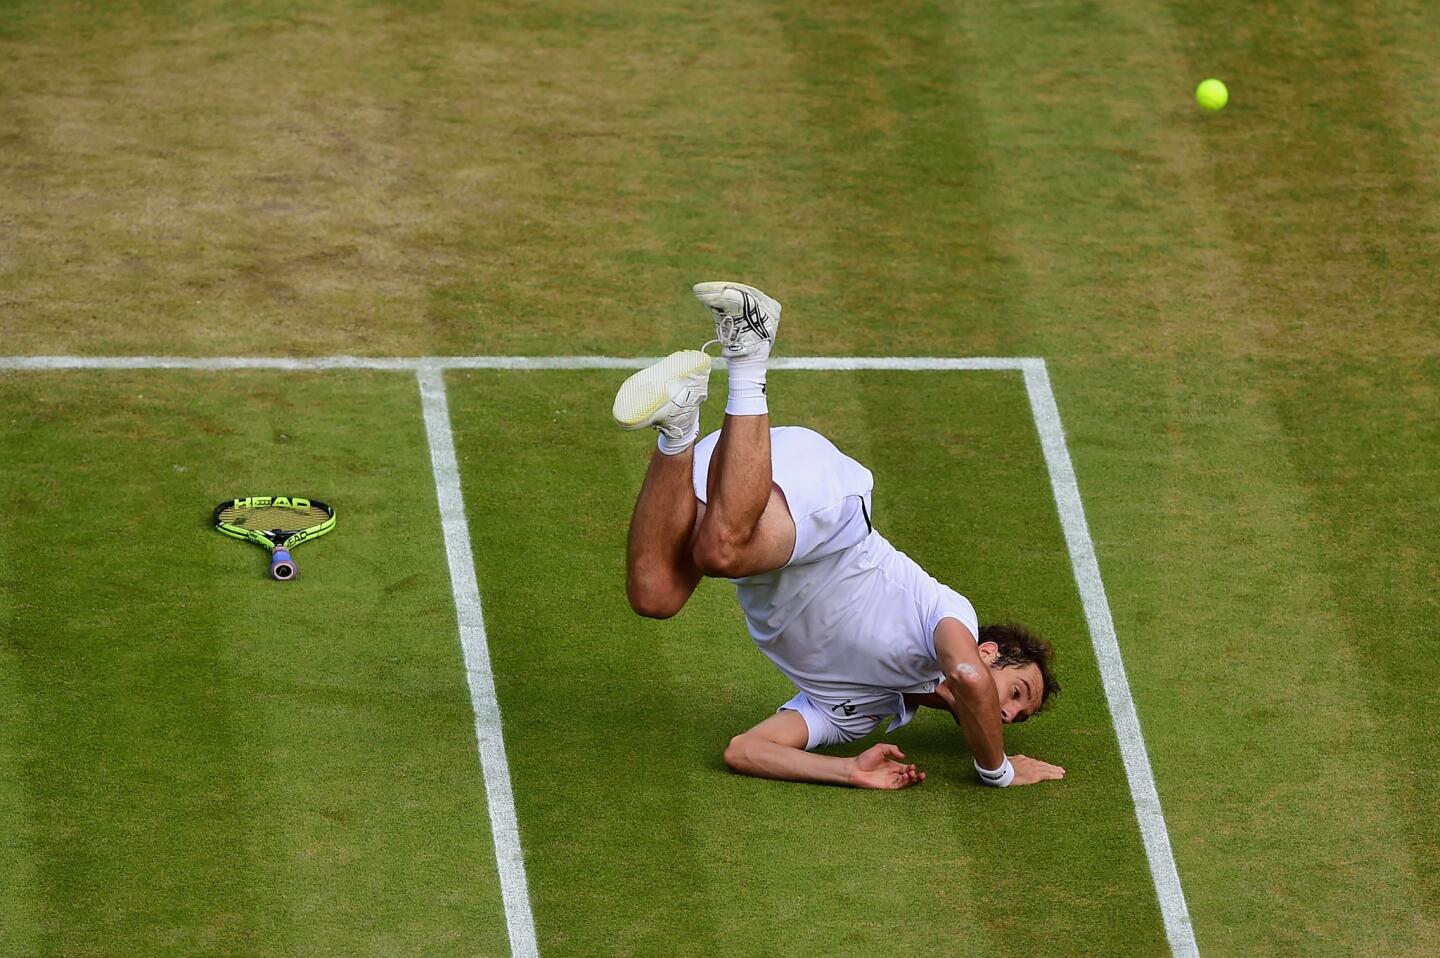 Day Nine: The Championships - Wimbledon 2015